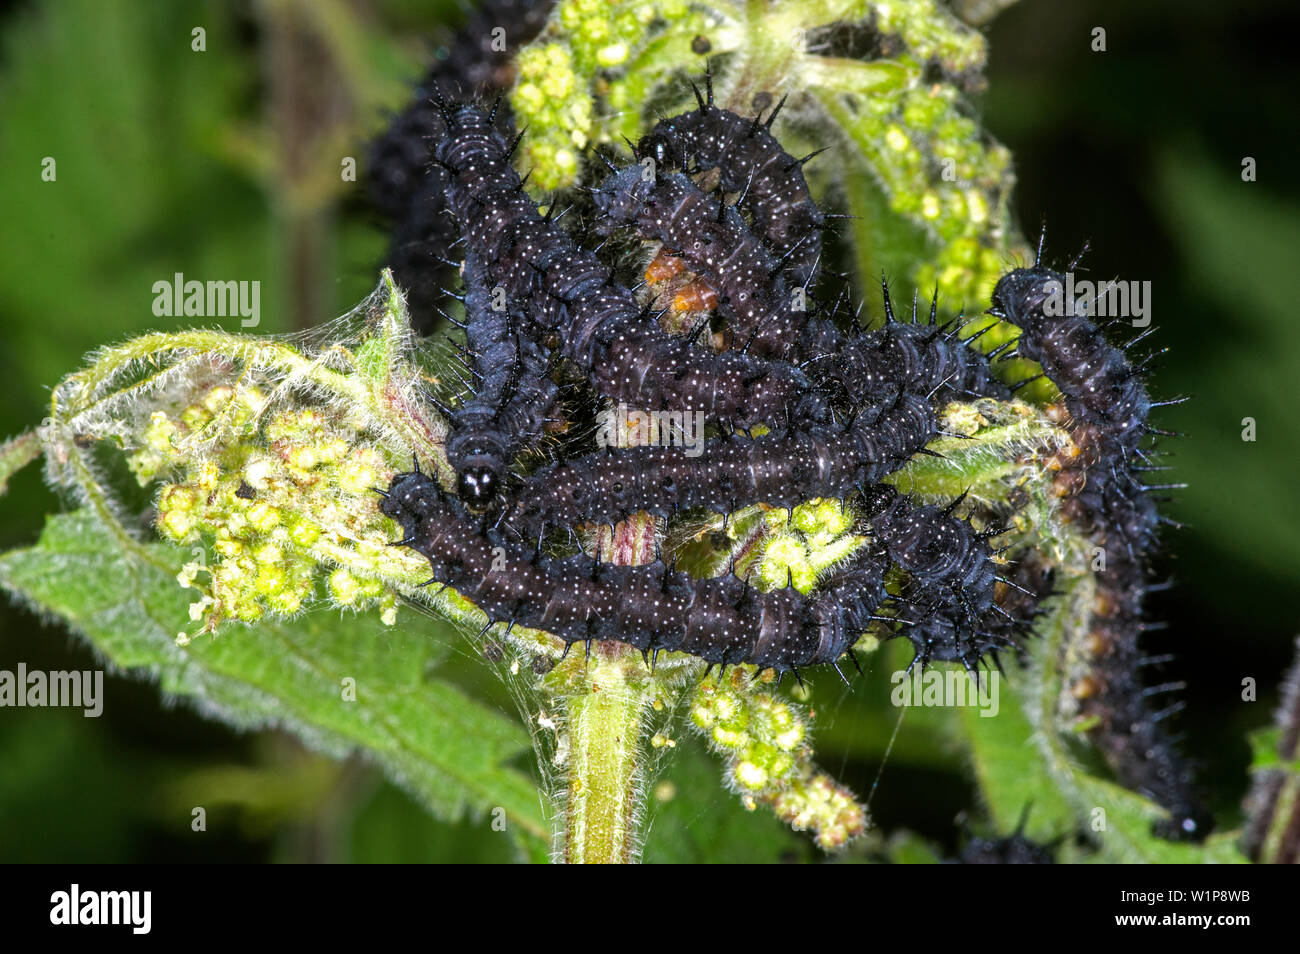 Several larvae in a web feeding on Nettles Stock Photo